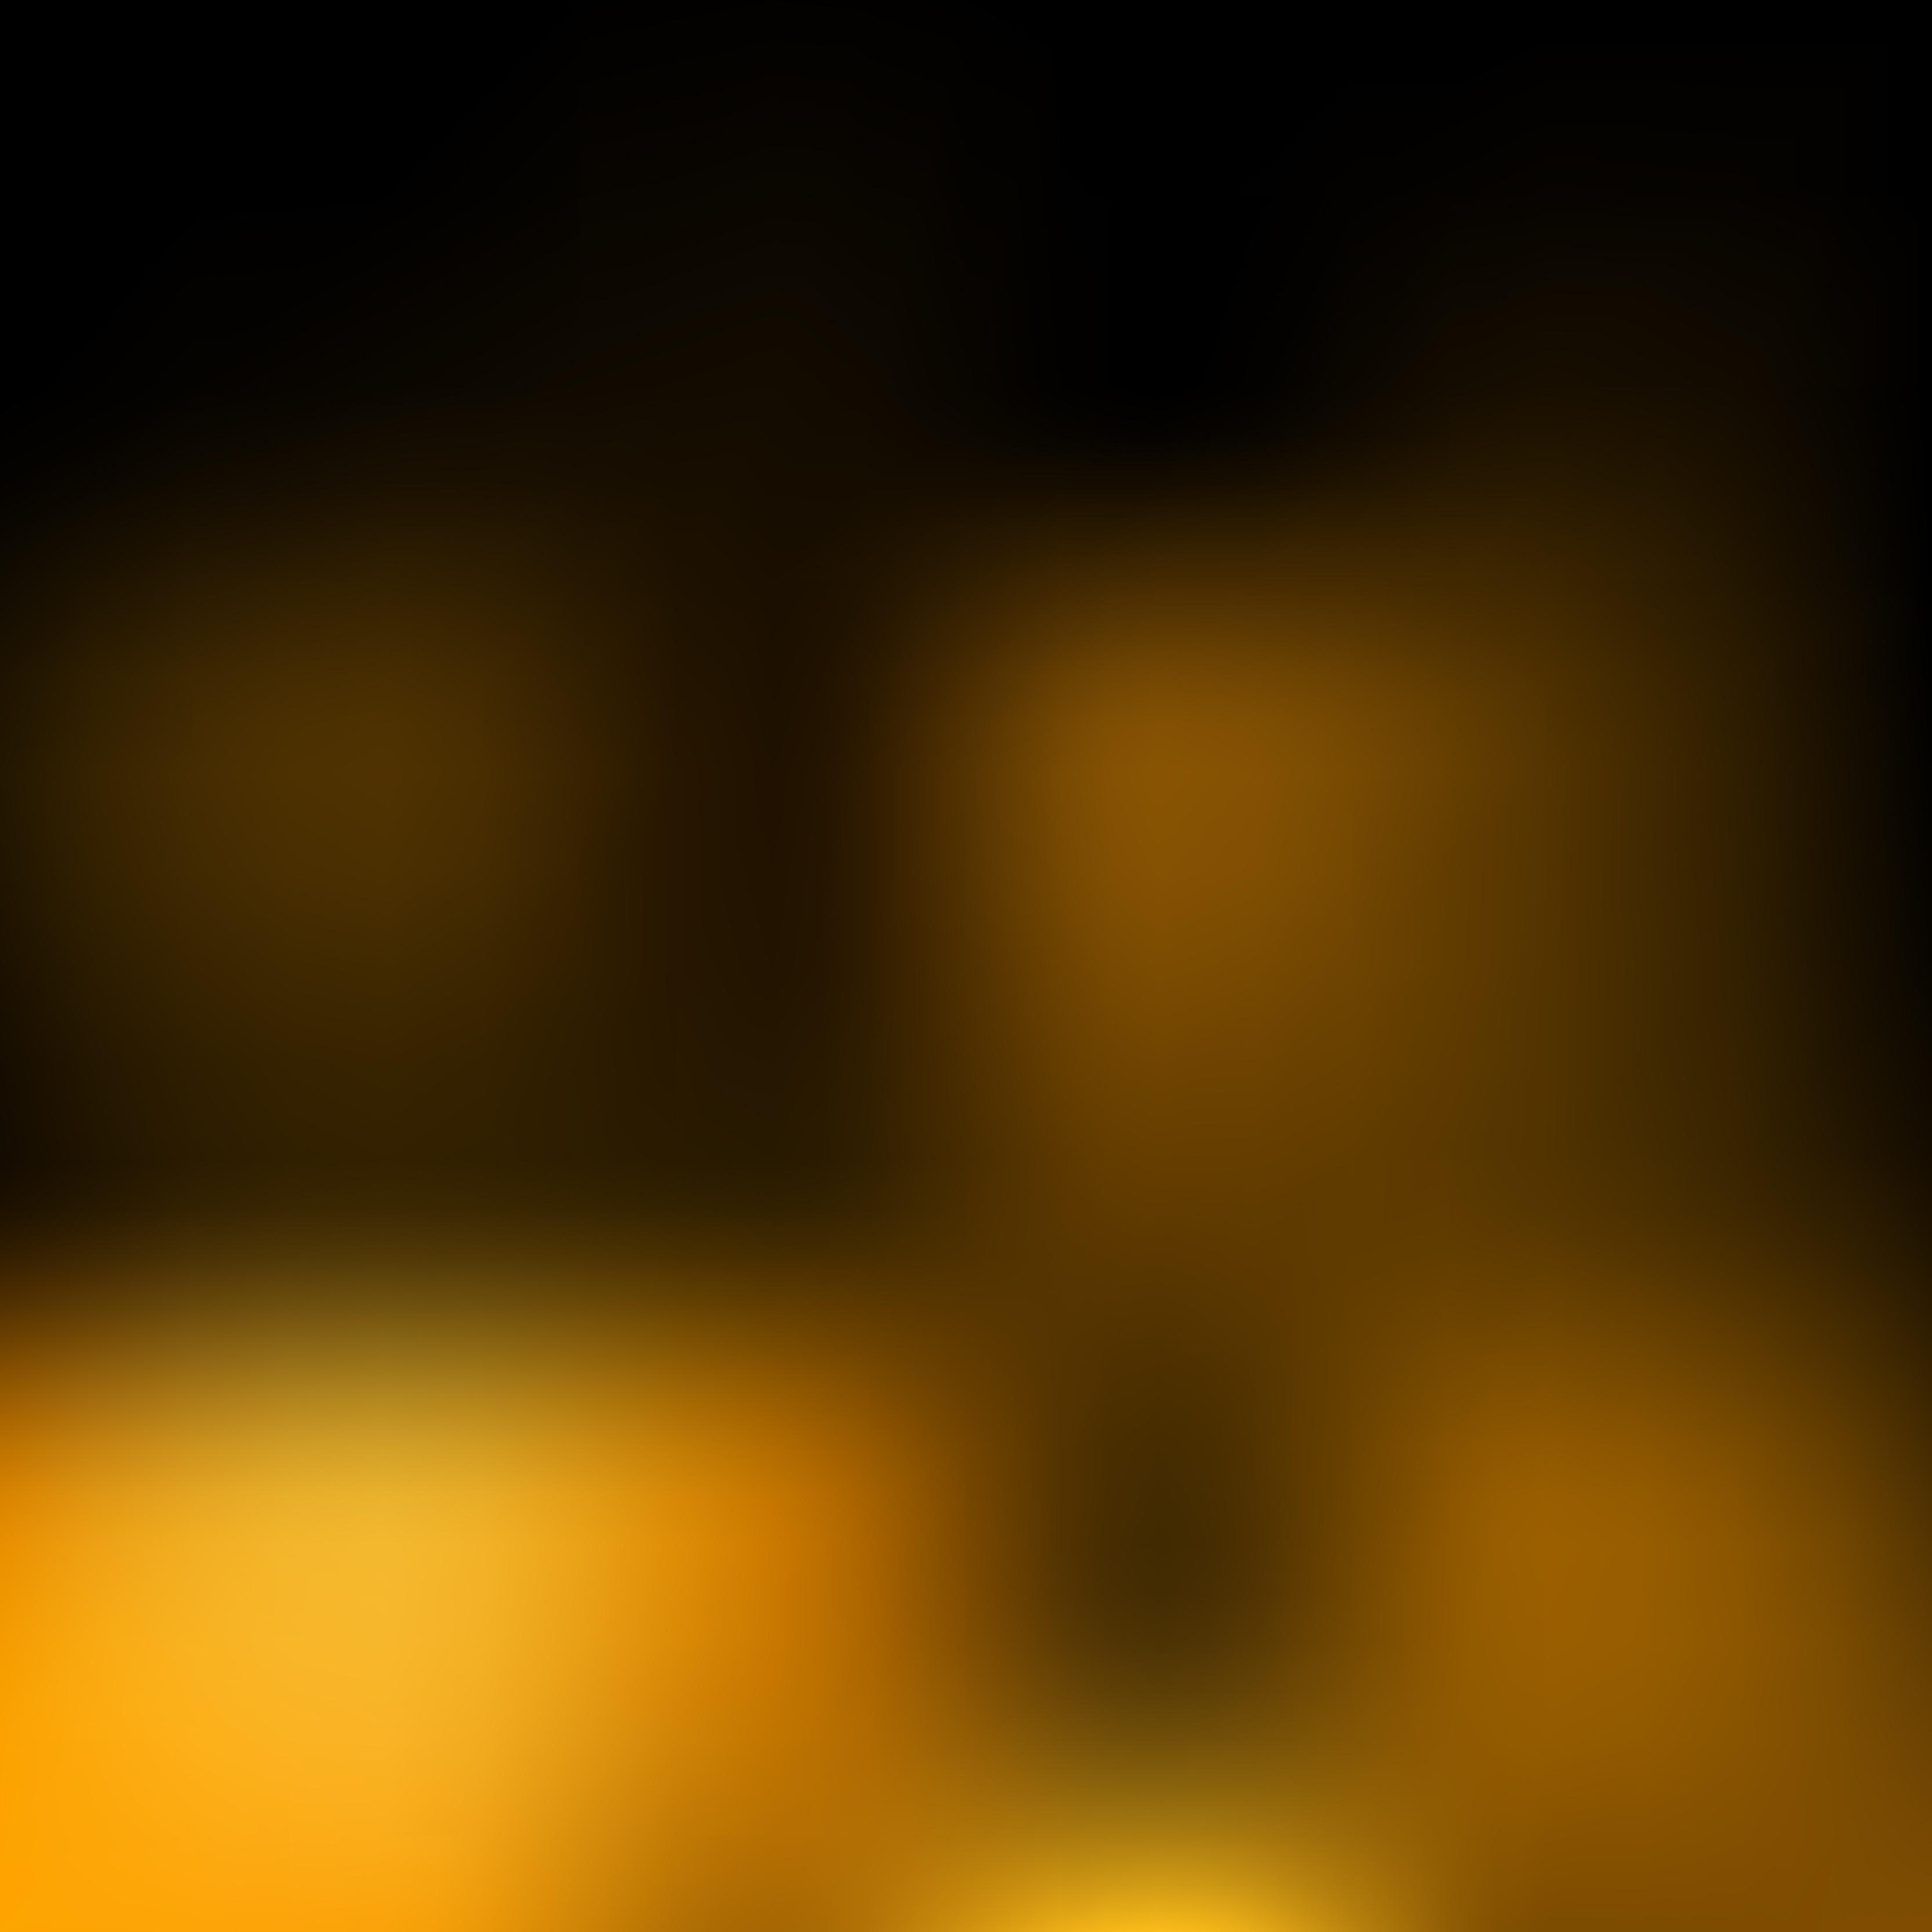 Blurred Black Orange Background | 123Freevectors